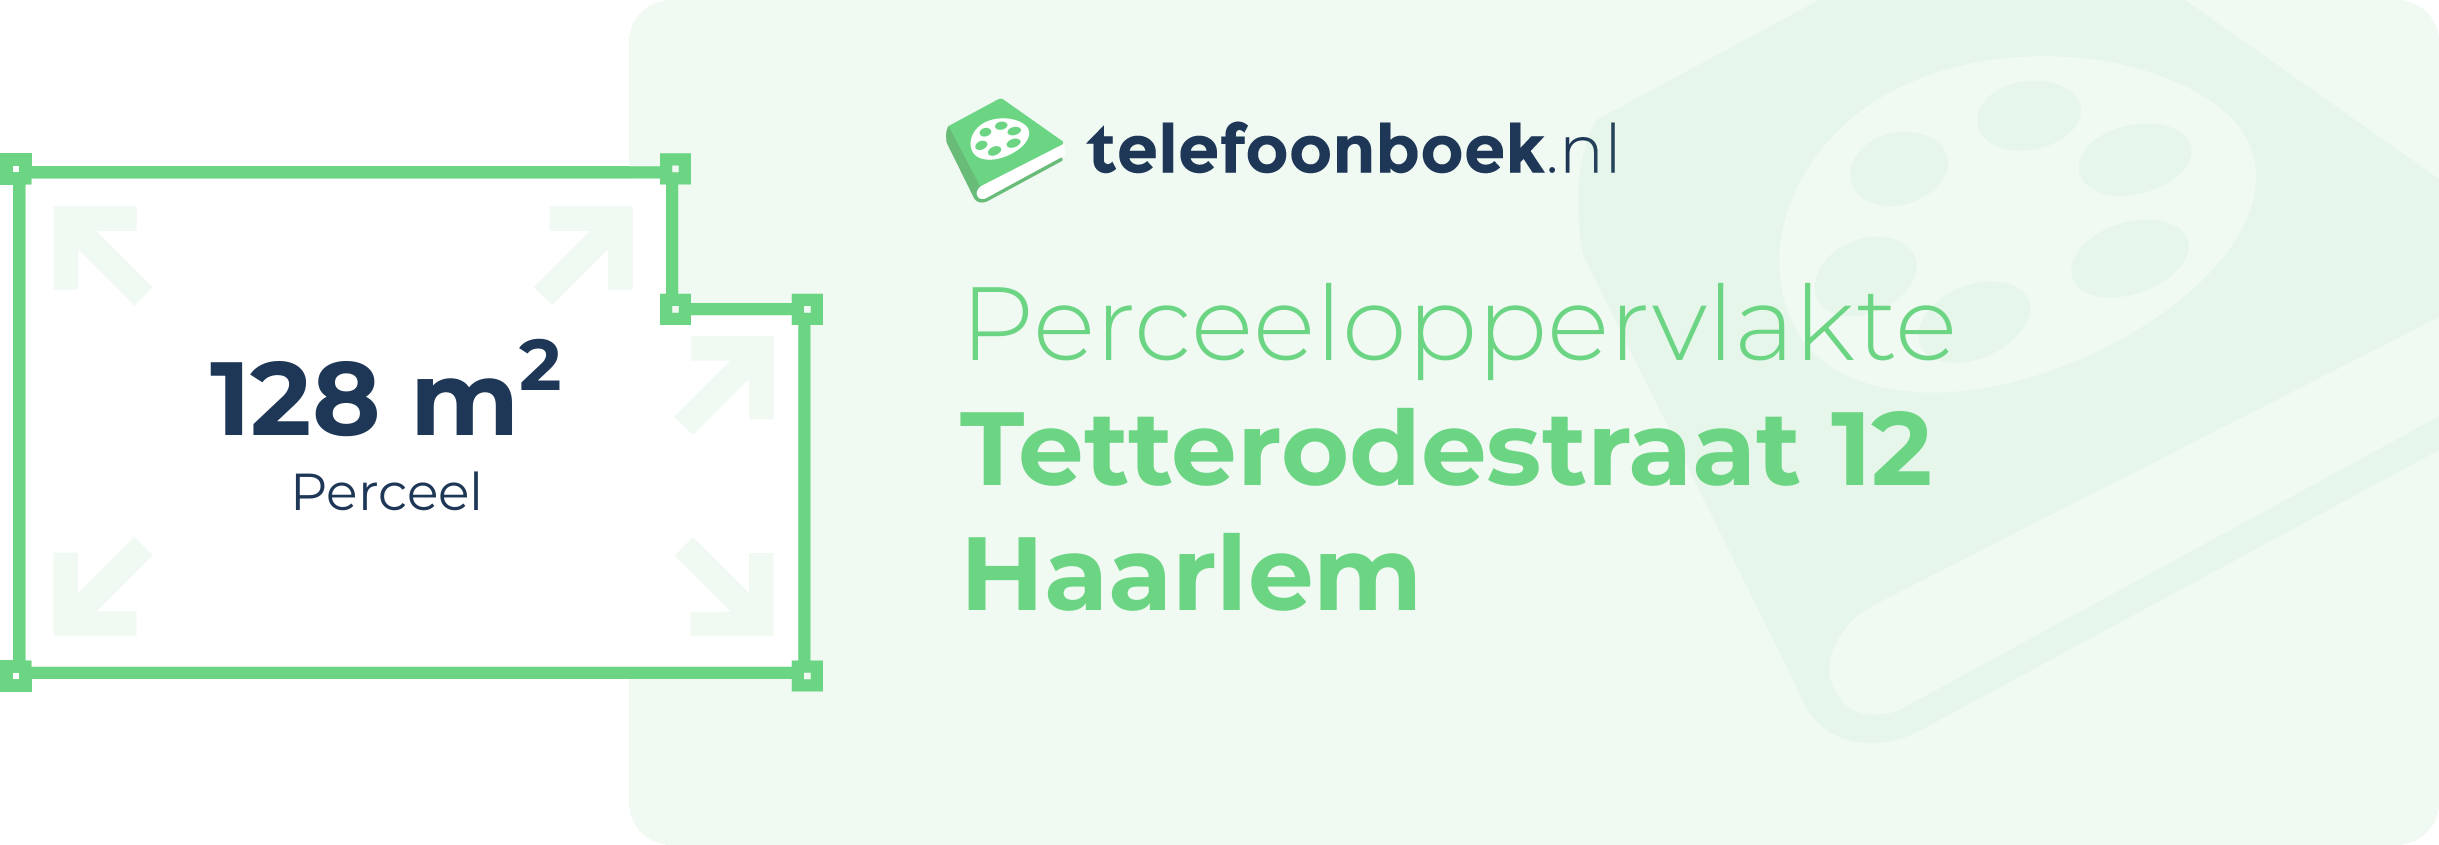 Perceeloppervlakte Tetterodestraat 12 Haarlem